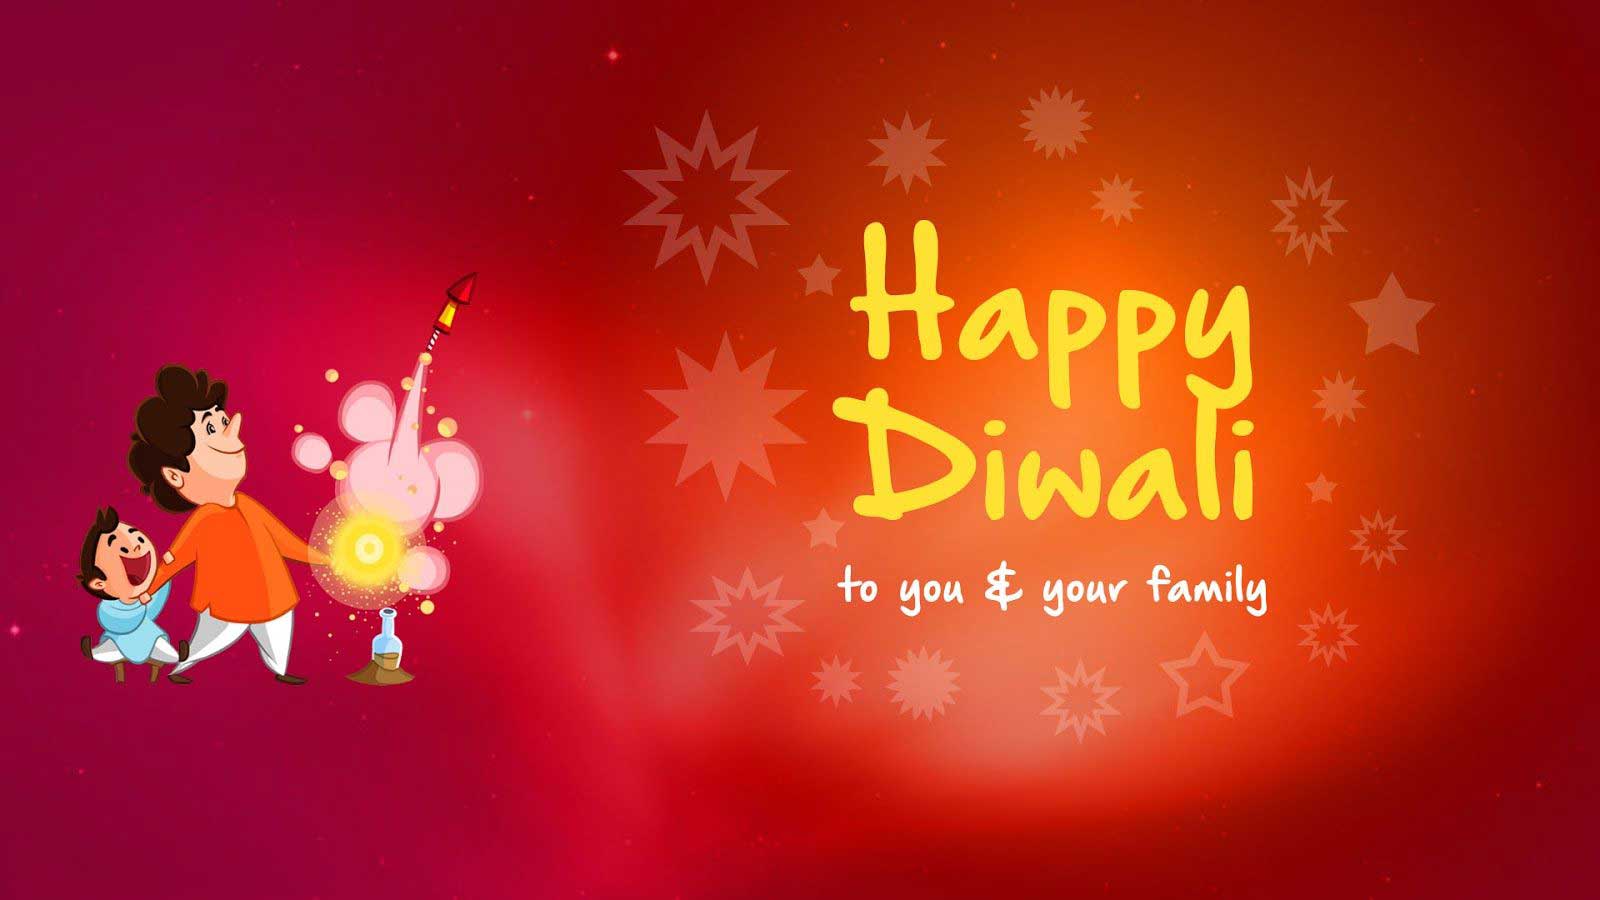 Happy Diwali Whatsapp Status Images